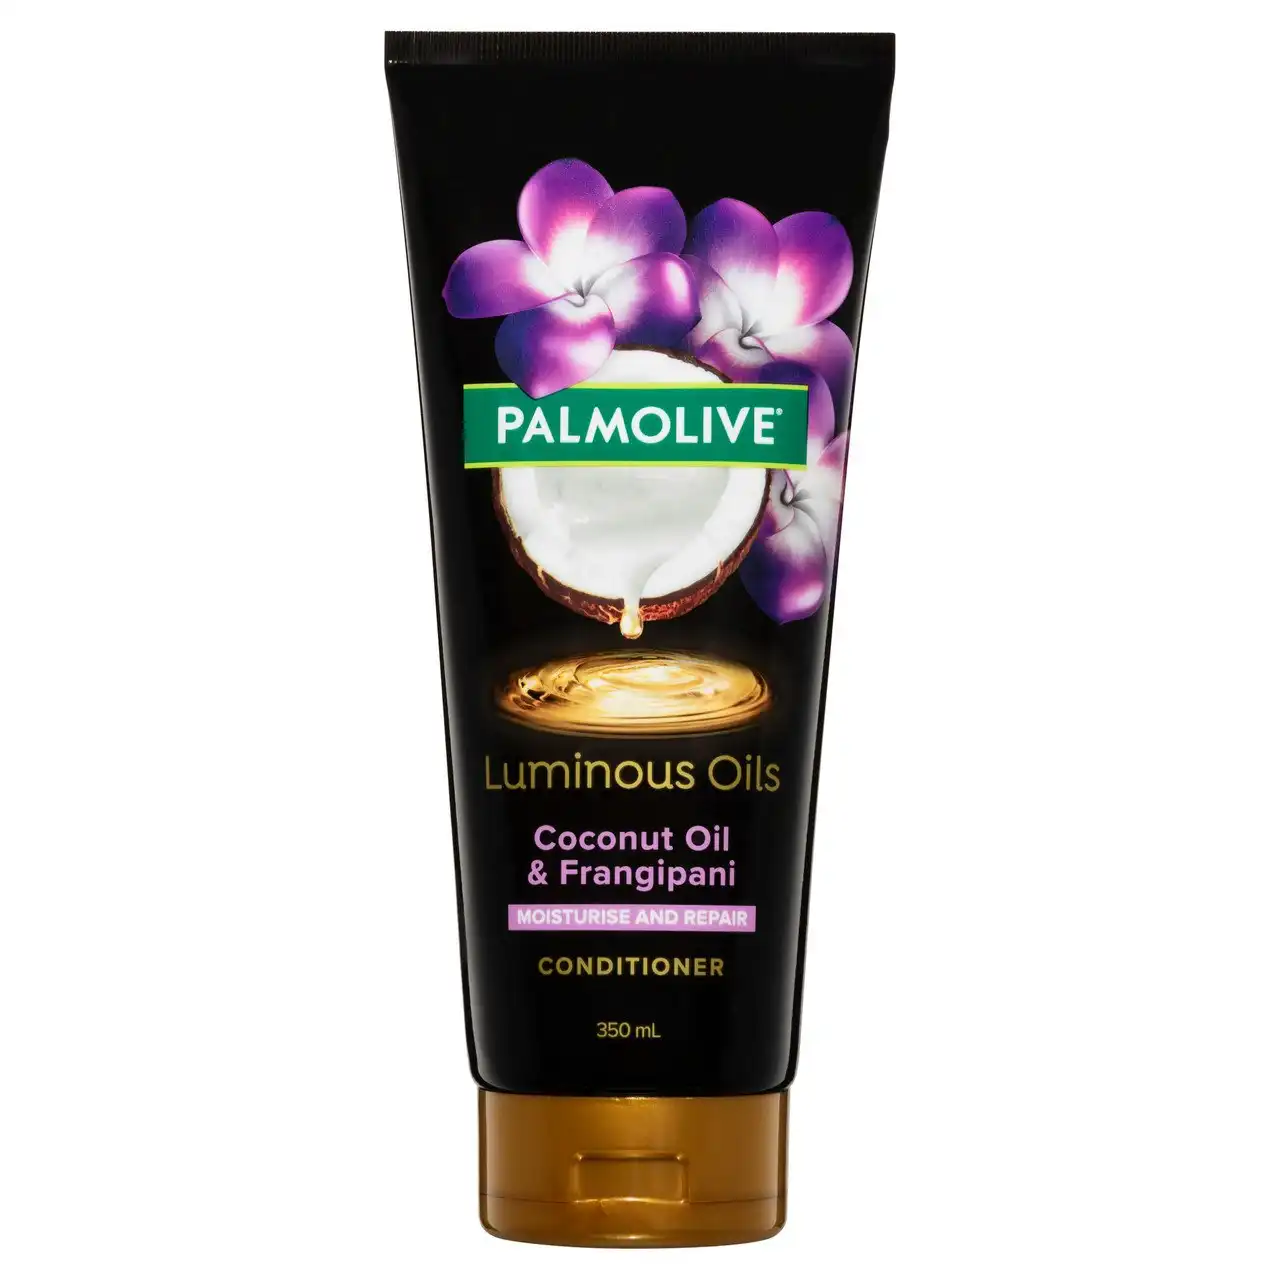 Palmolive Luminous Oils Hair Conditioner, Far North Queensland Frangipani & Coconut Oil, 350mL, Moisturise and Repair